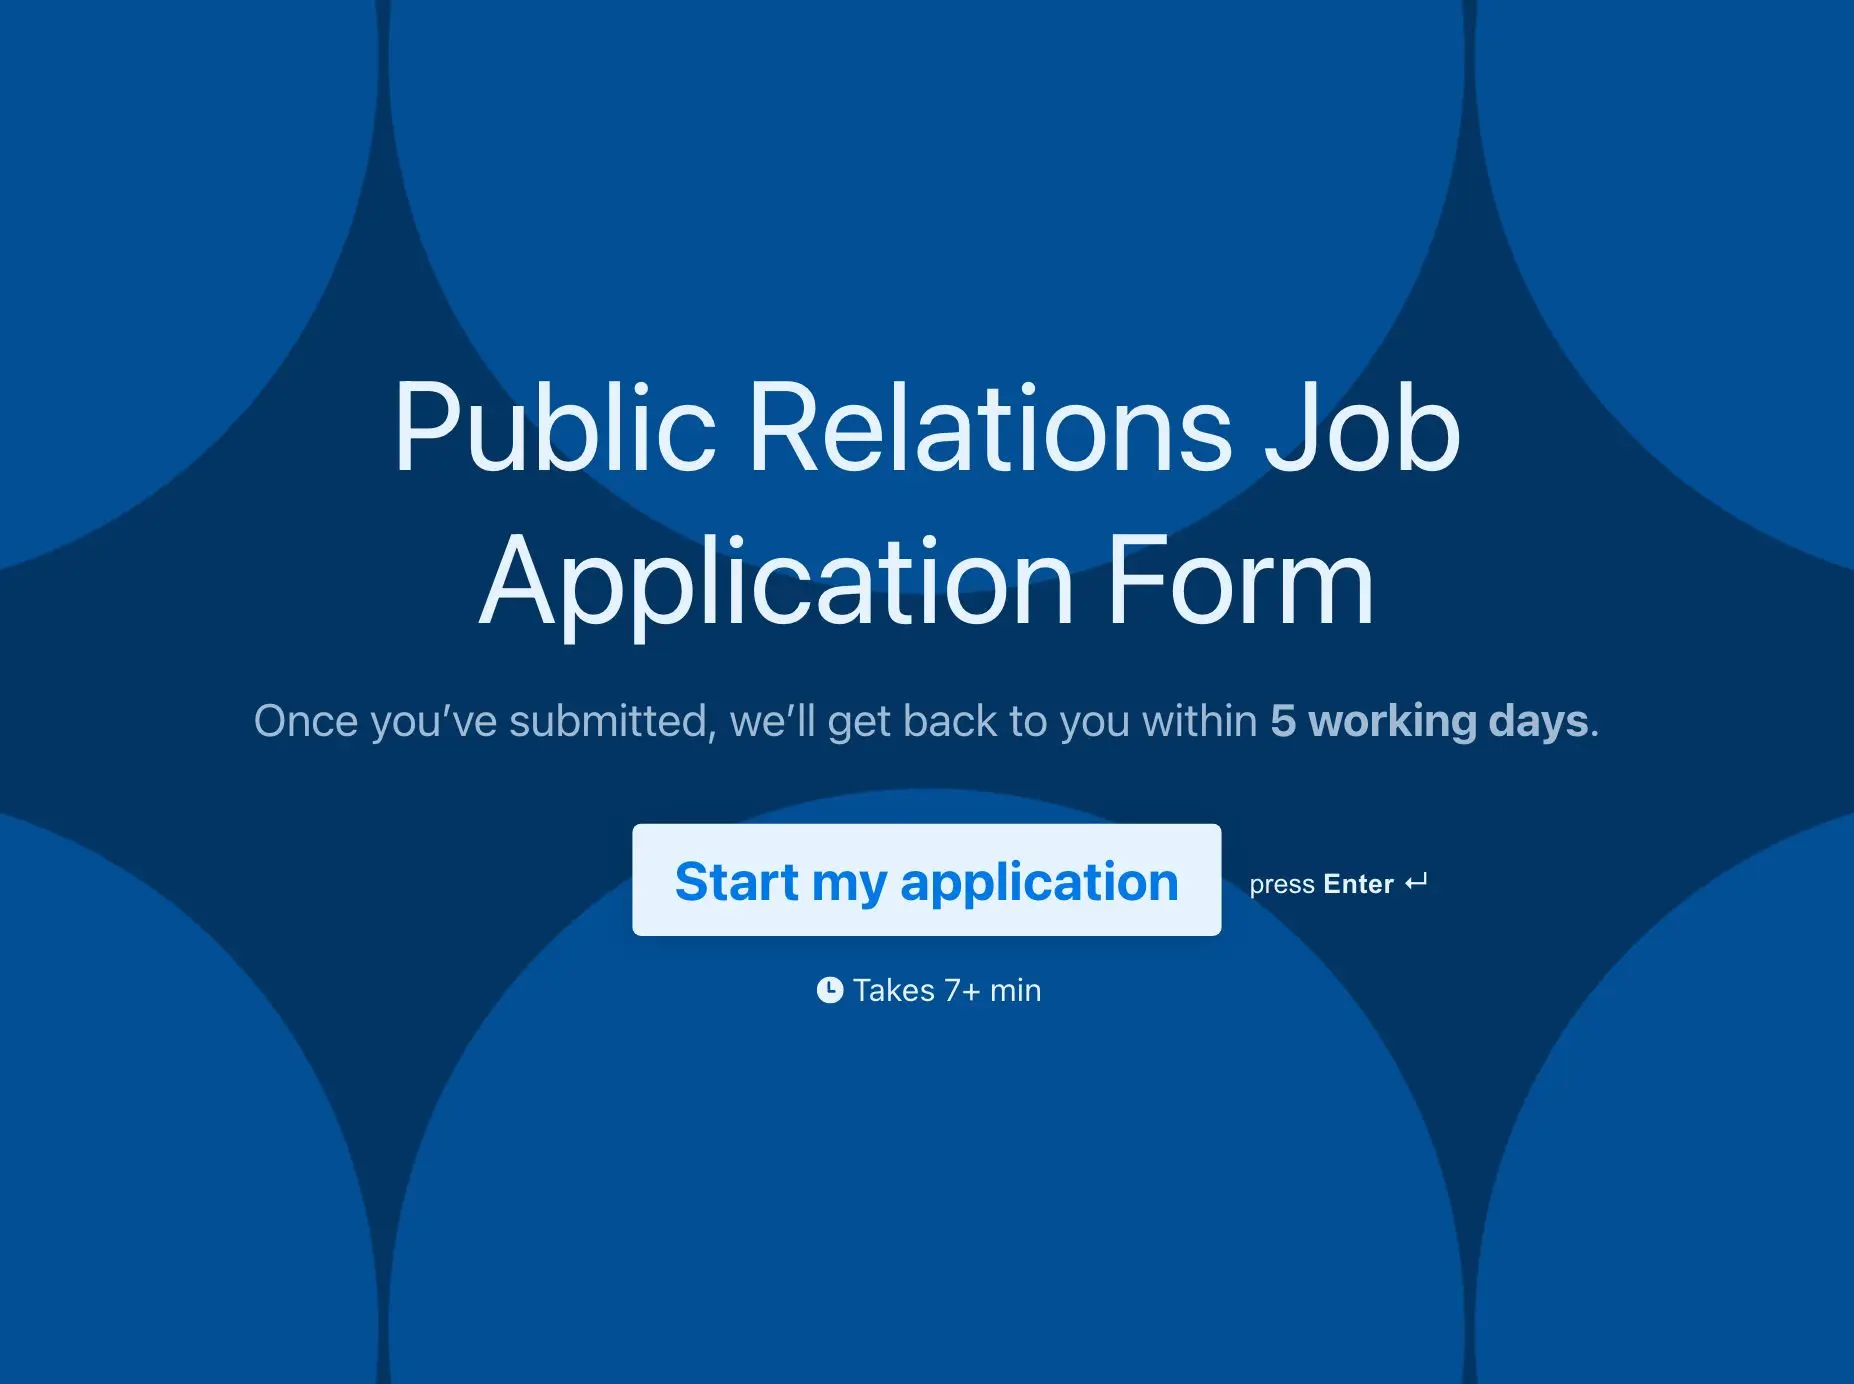 Public Relations Job Application Form Template Hero